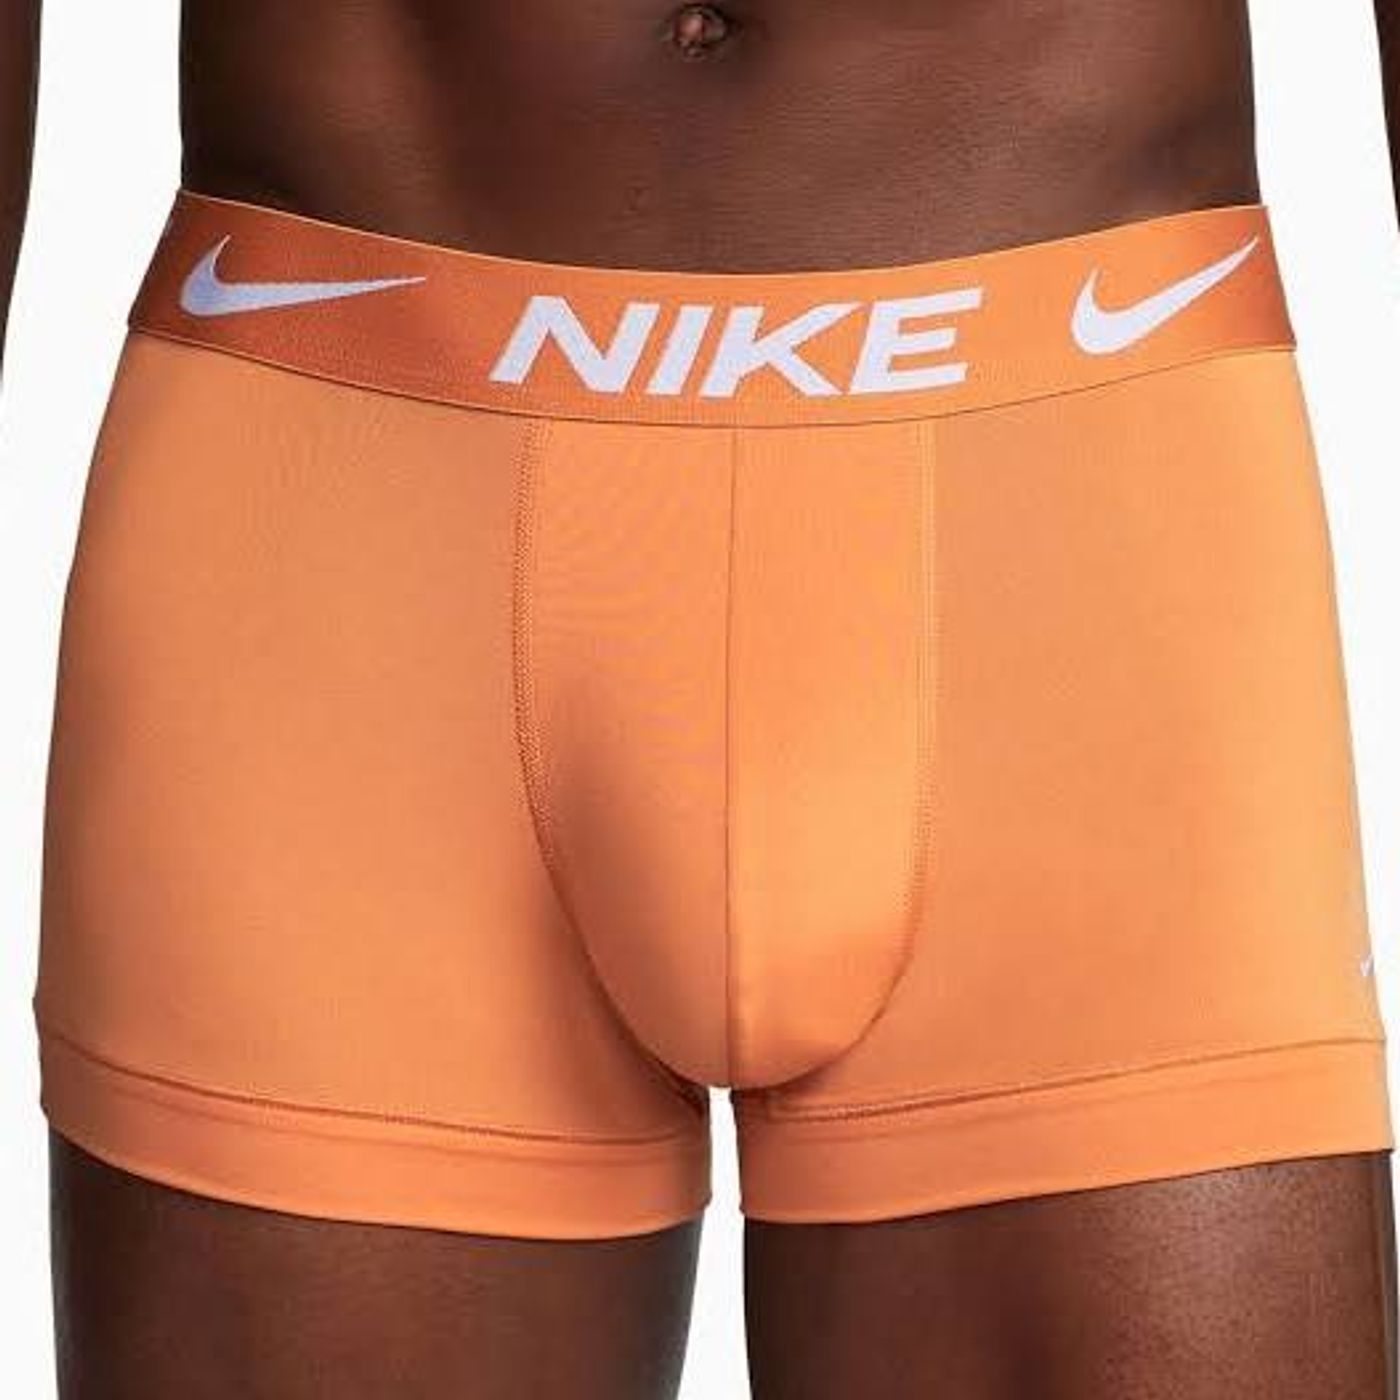 Nike Underwear Thieves Image